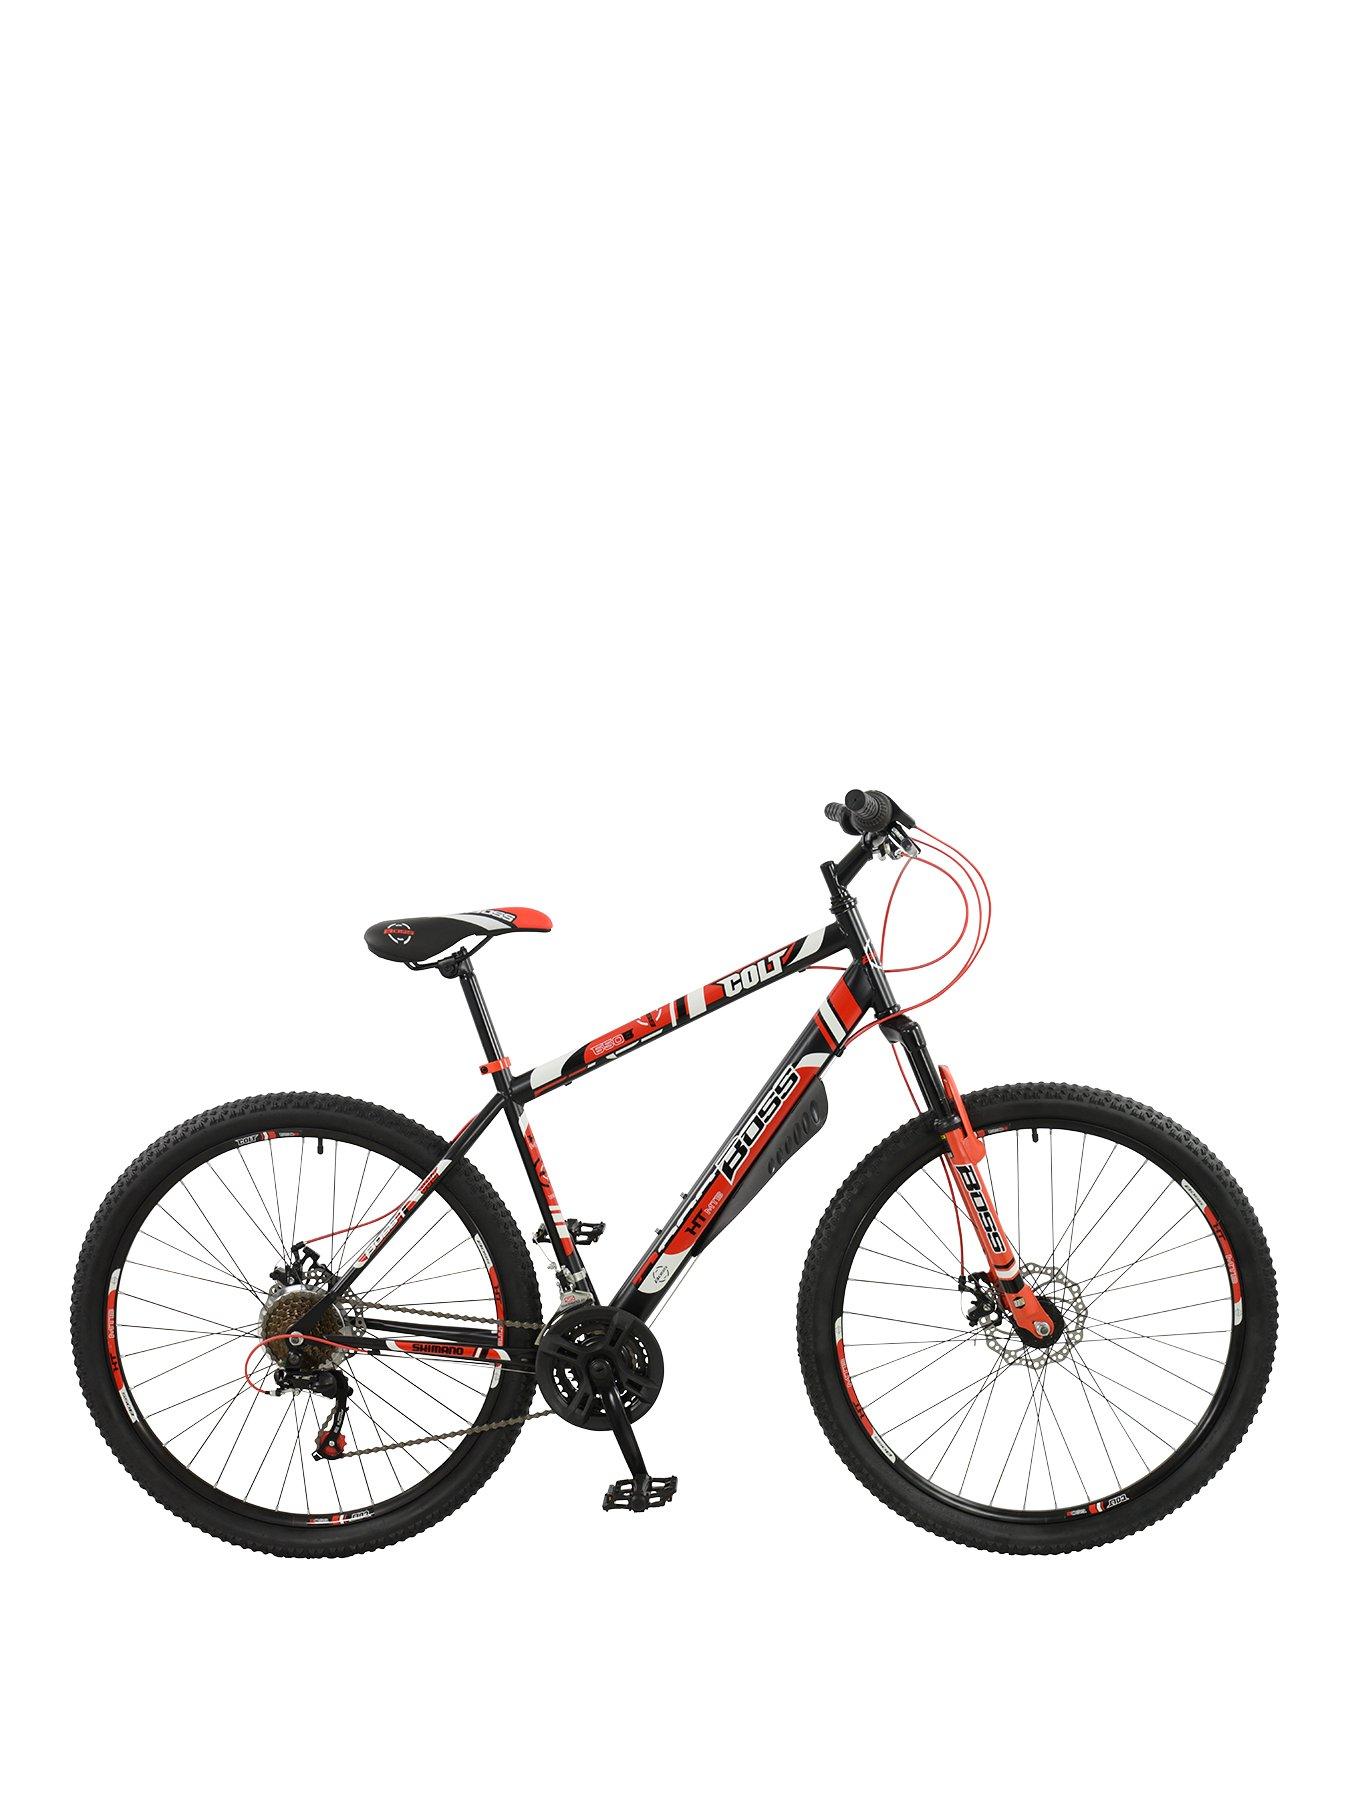 18 inch frame size bike